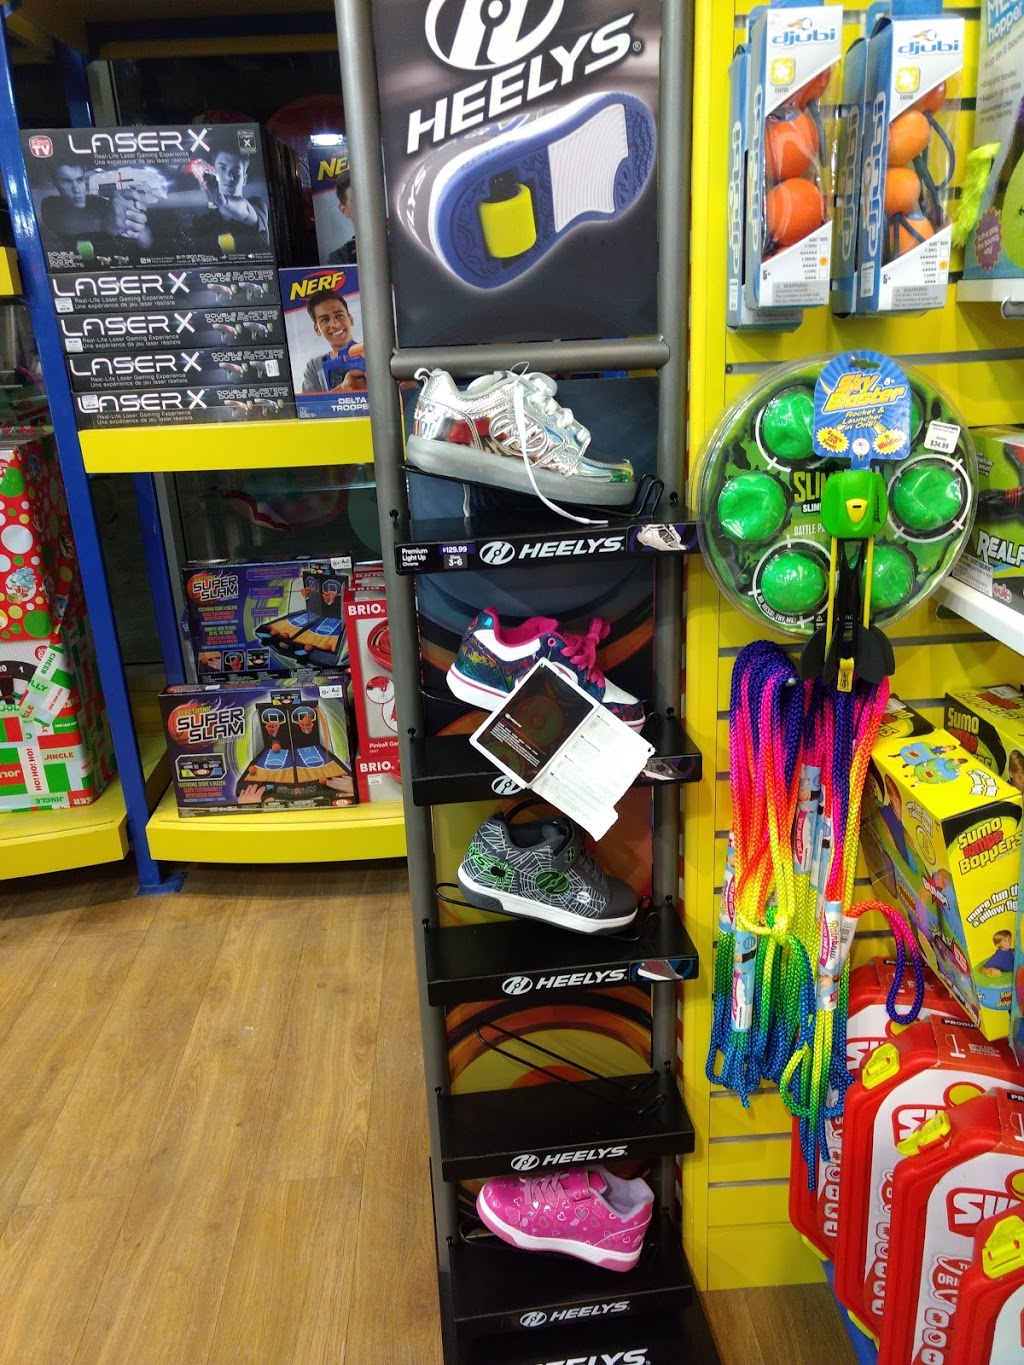 Mastermind Toys | 71 Marketplace Ave, Nepean, ON K2J 5G4, Canada | Phone: (613) 825-7997